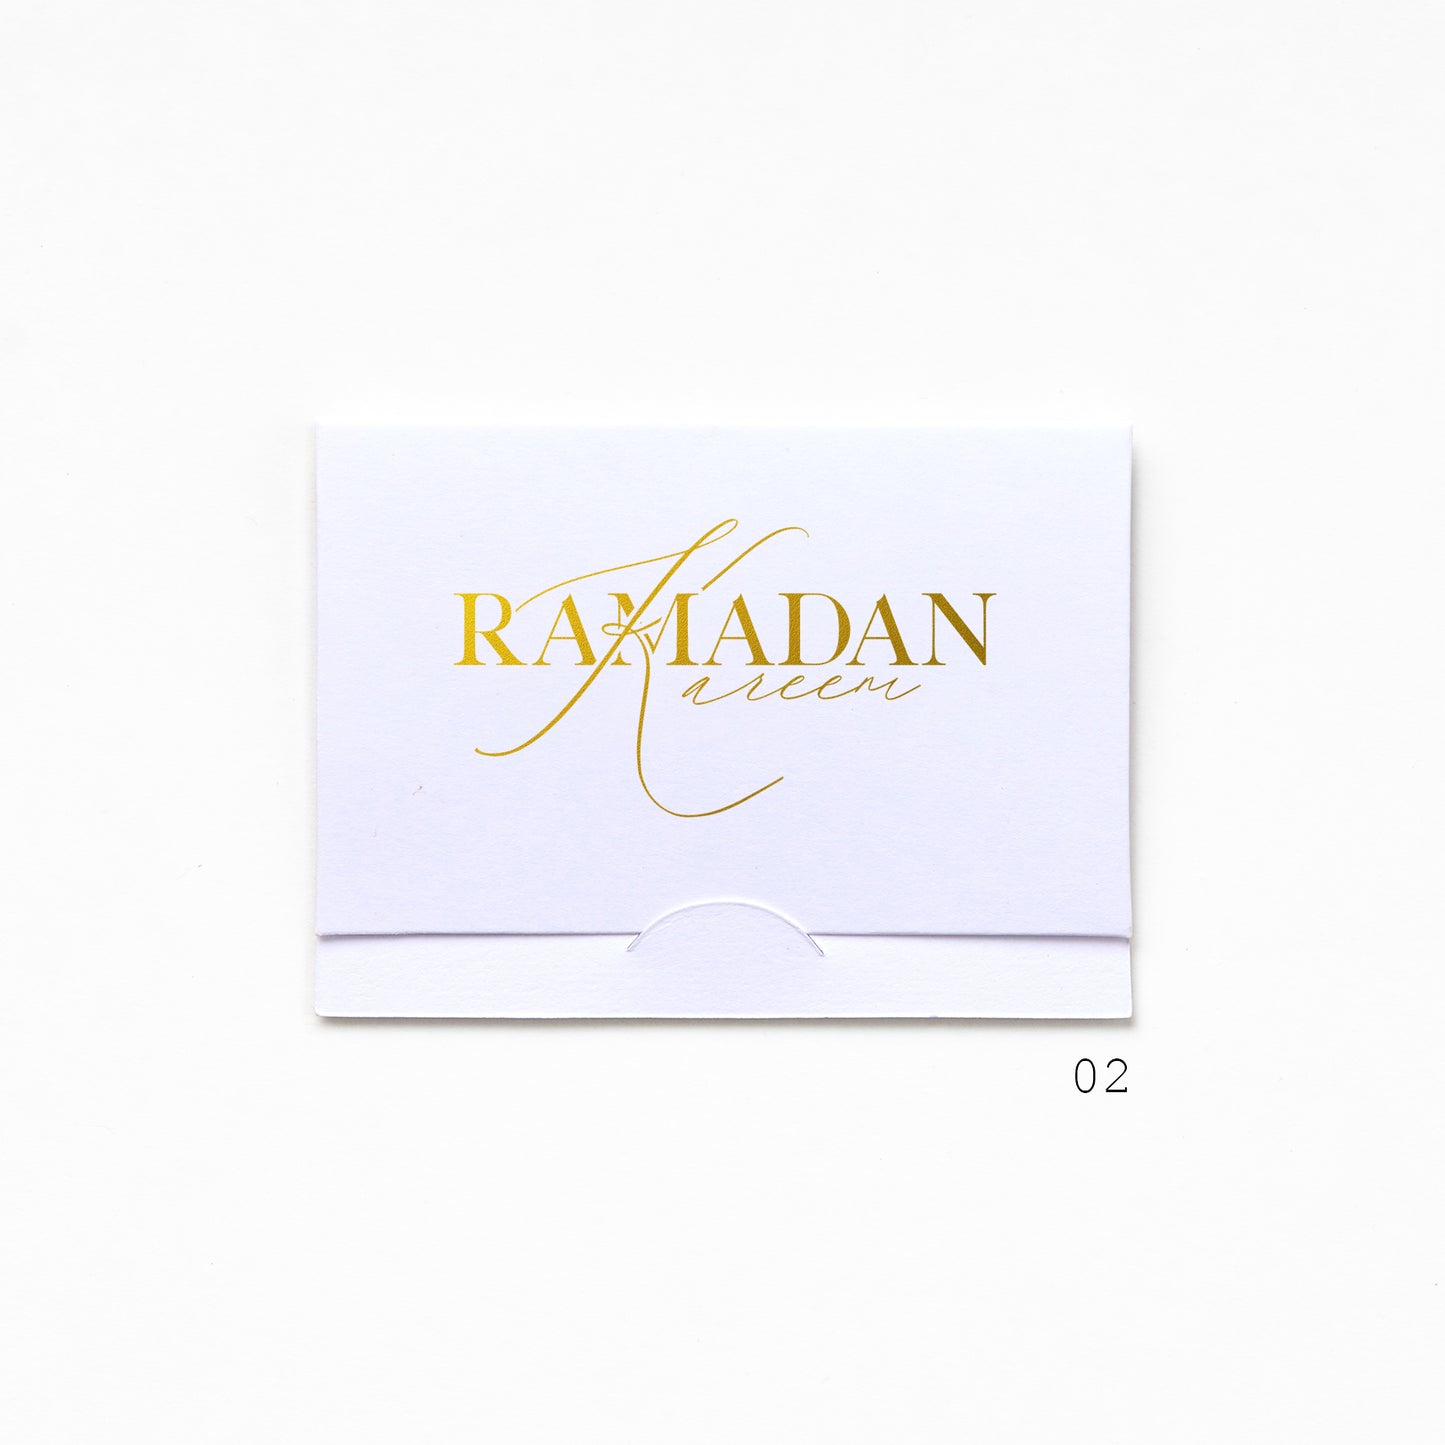 Pocket Greeting Card - Ramadan Kareem 02